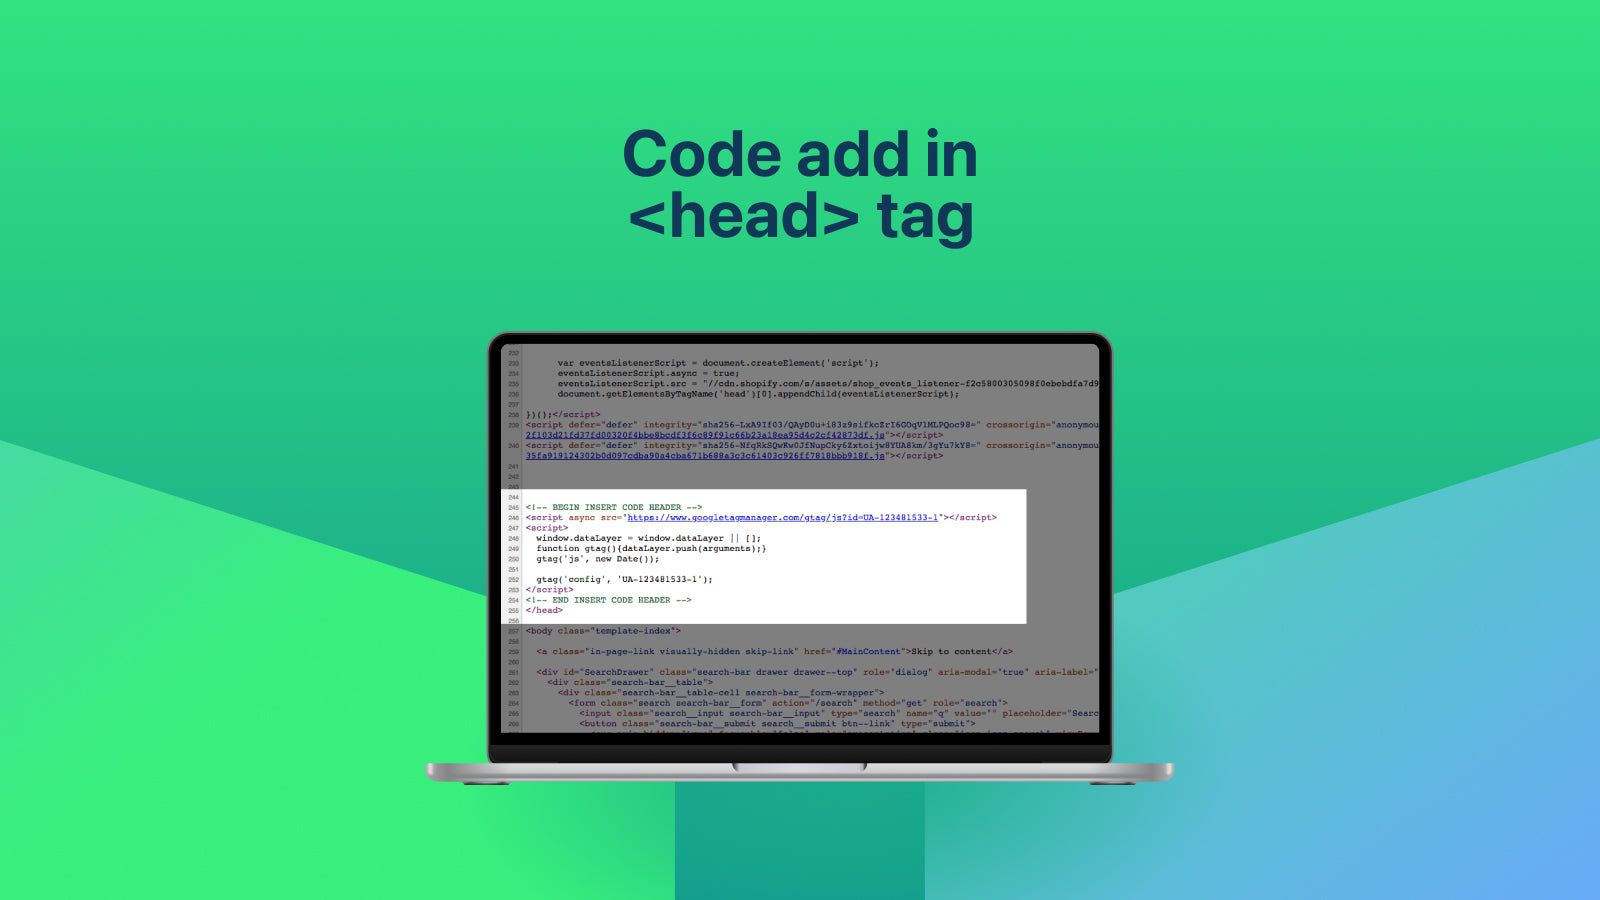 Code add in <head> tag